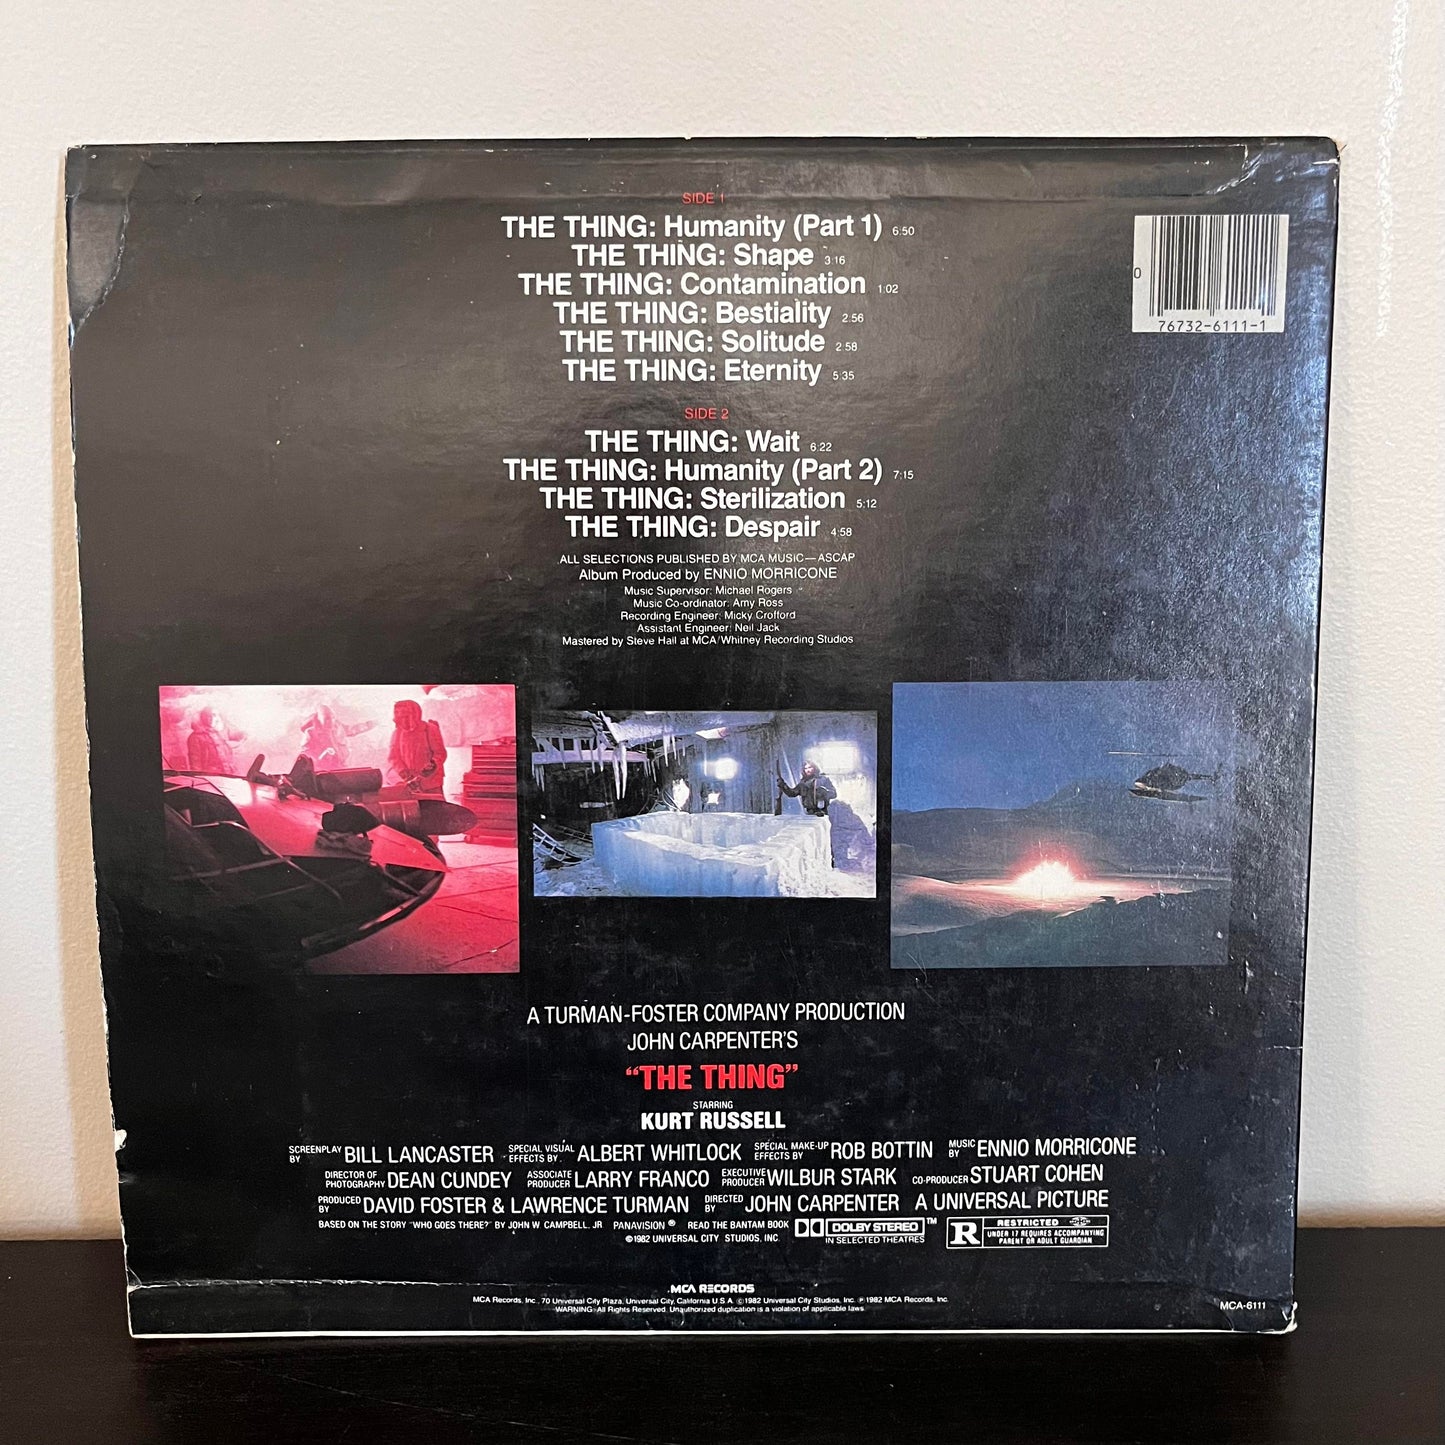 John Carpenter's The Thing Promotional Copy MC-6111 Vinyl VG+ Used